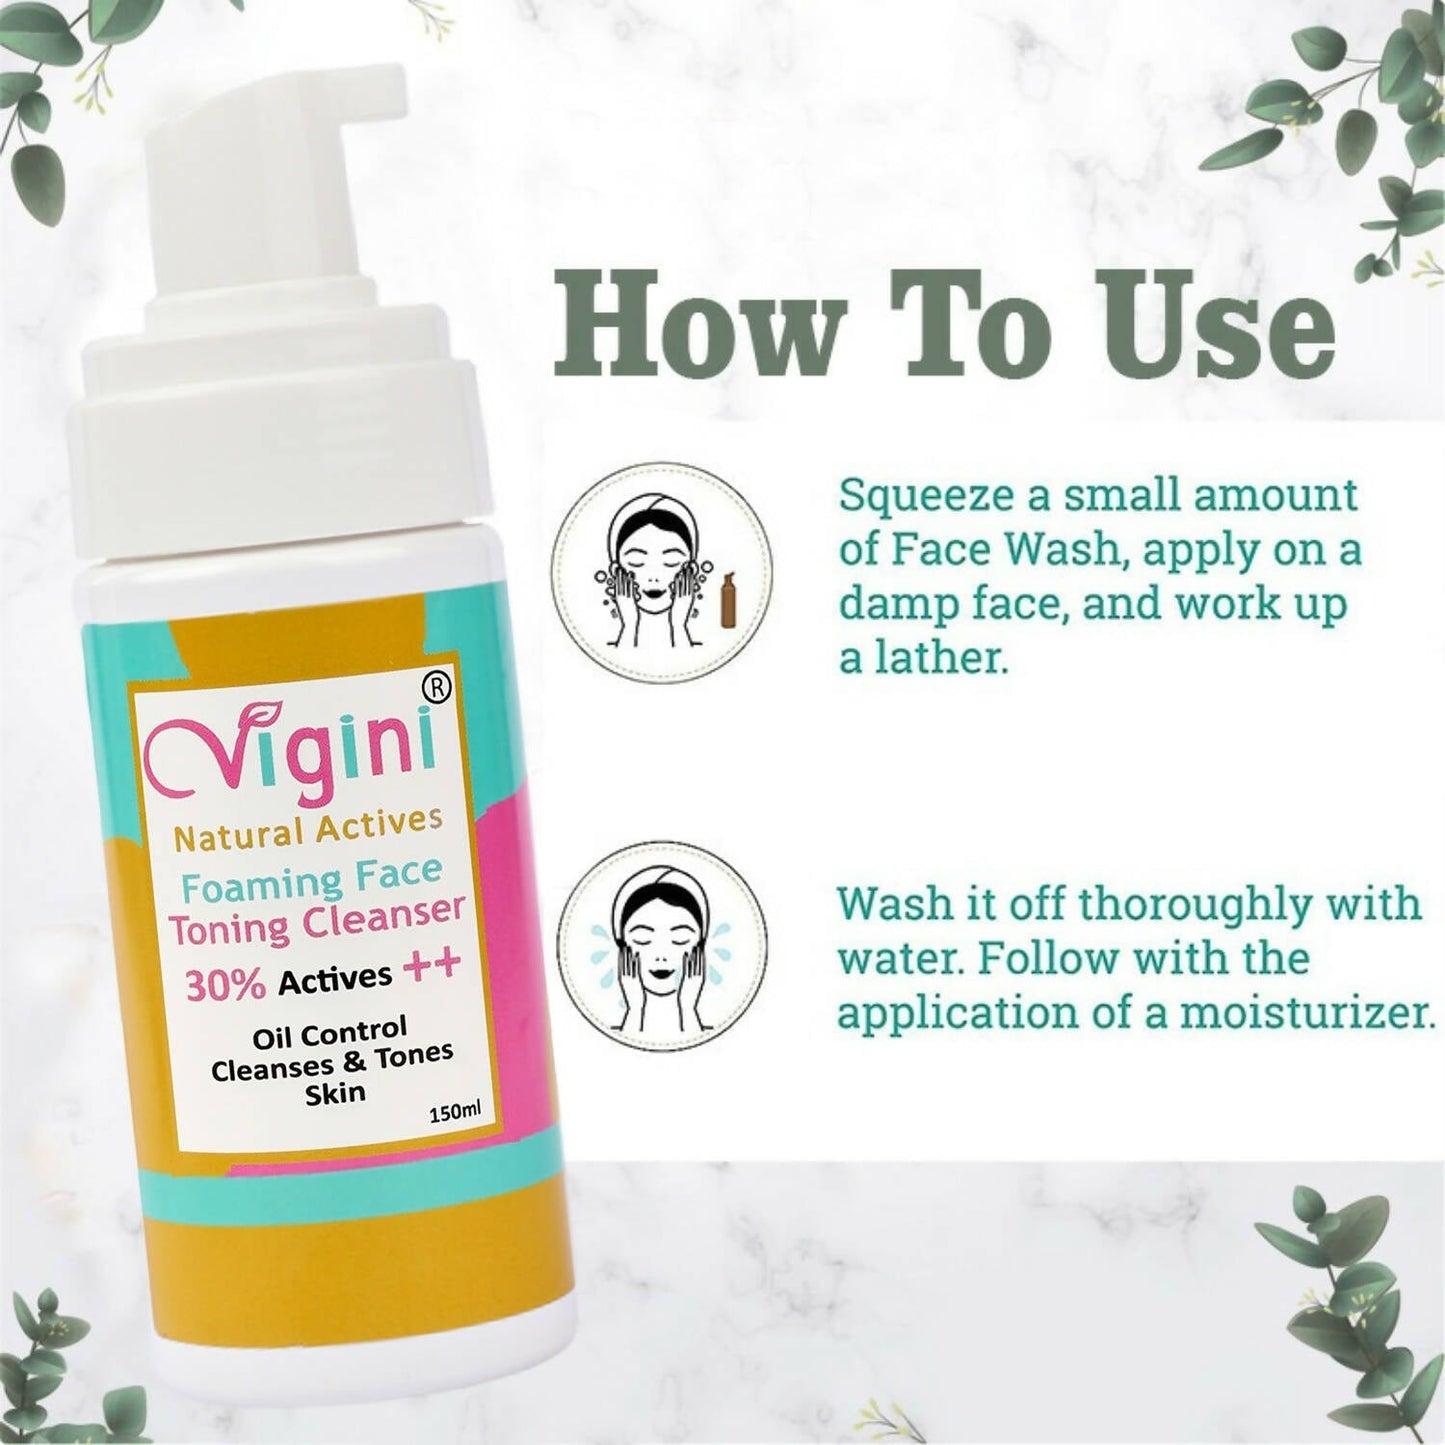 Vigini Natural Actives Foaming Face Toning Cleanser Face Wash for Men & Women